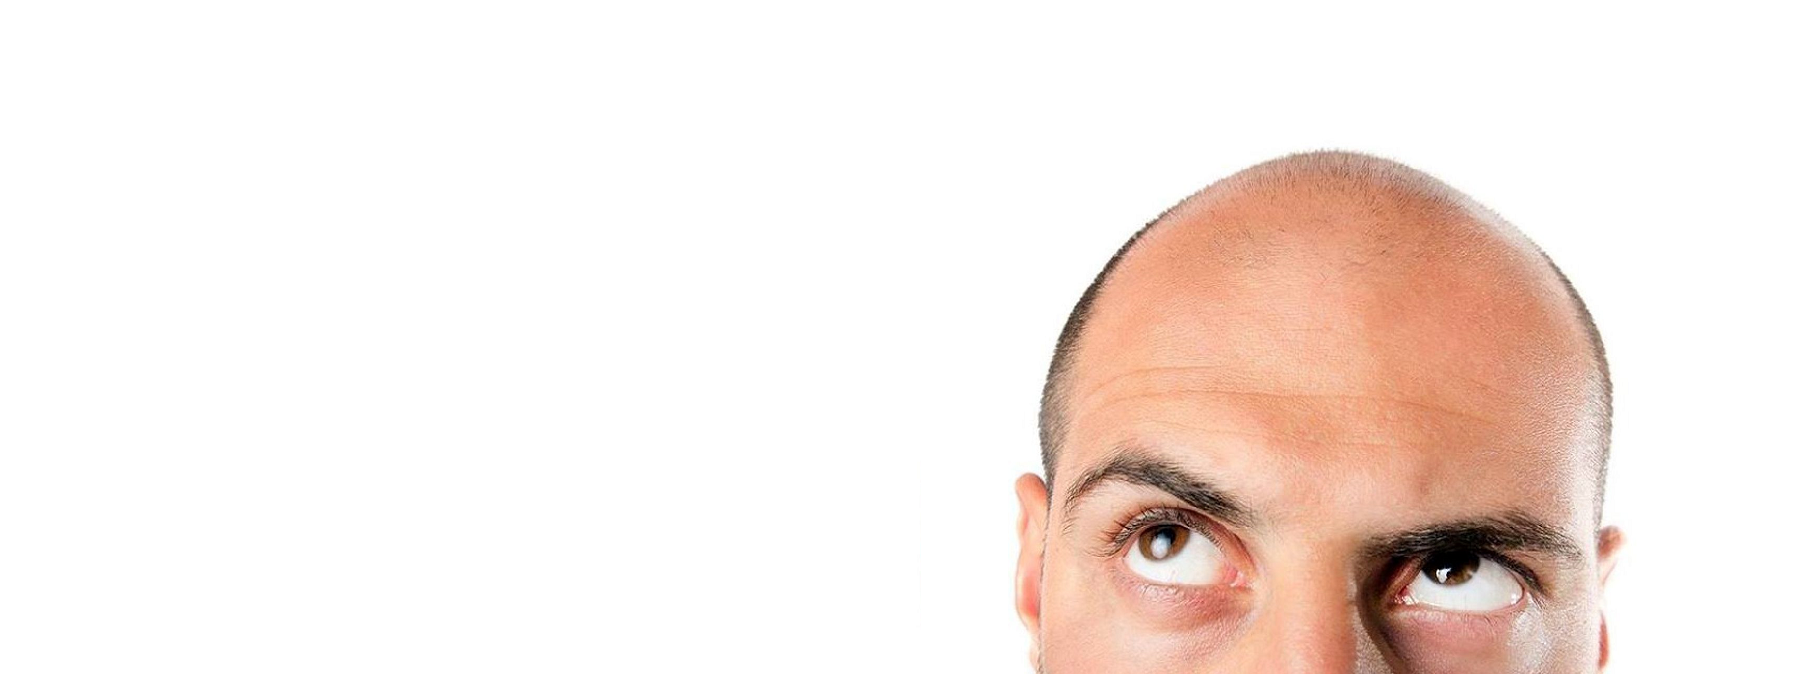 Micropigmentation - Restore Your Hairline